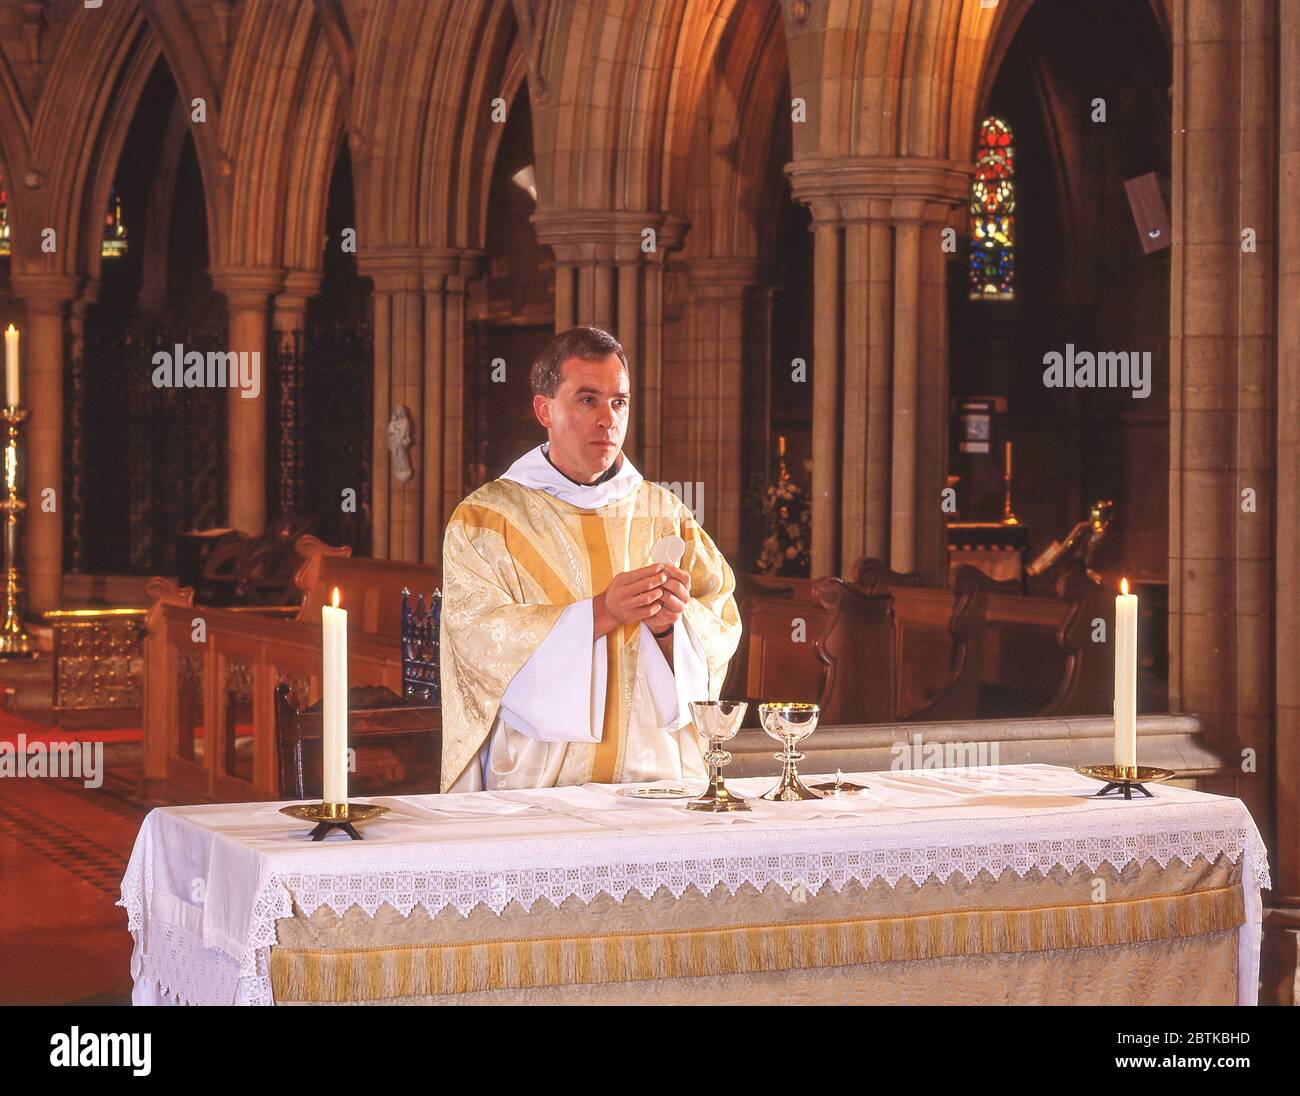 Vicar at church altar, Surrey, England, United Kingdom Stock Photo